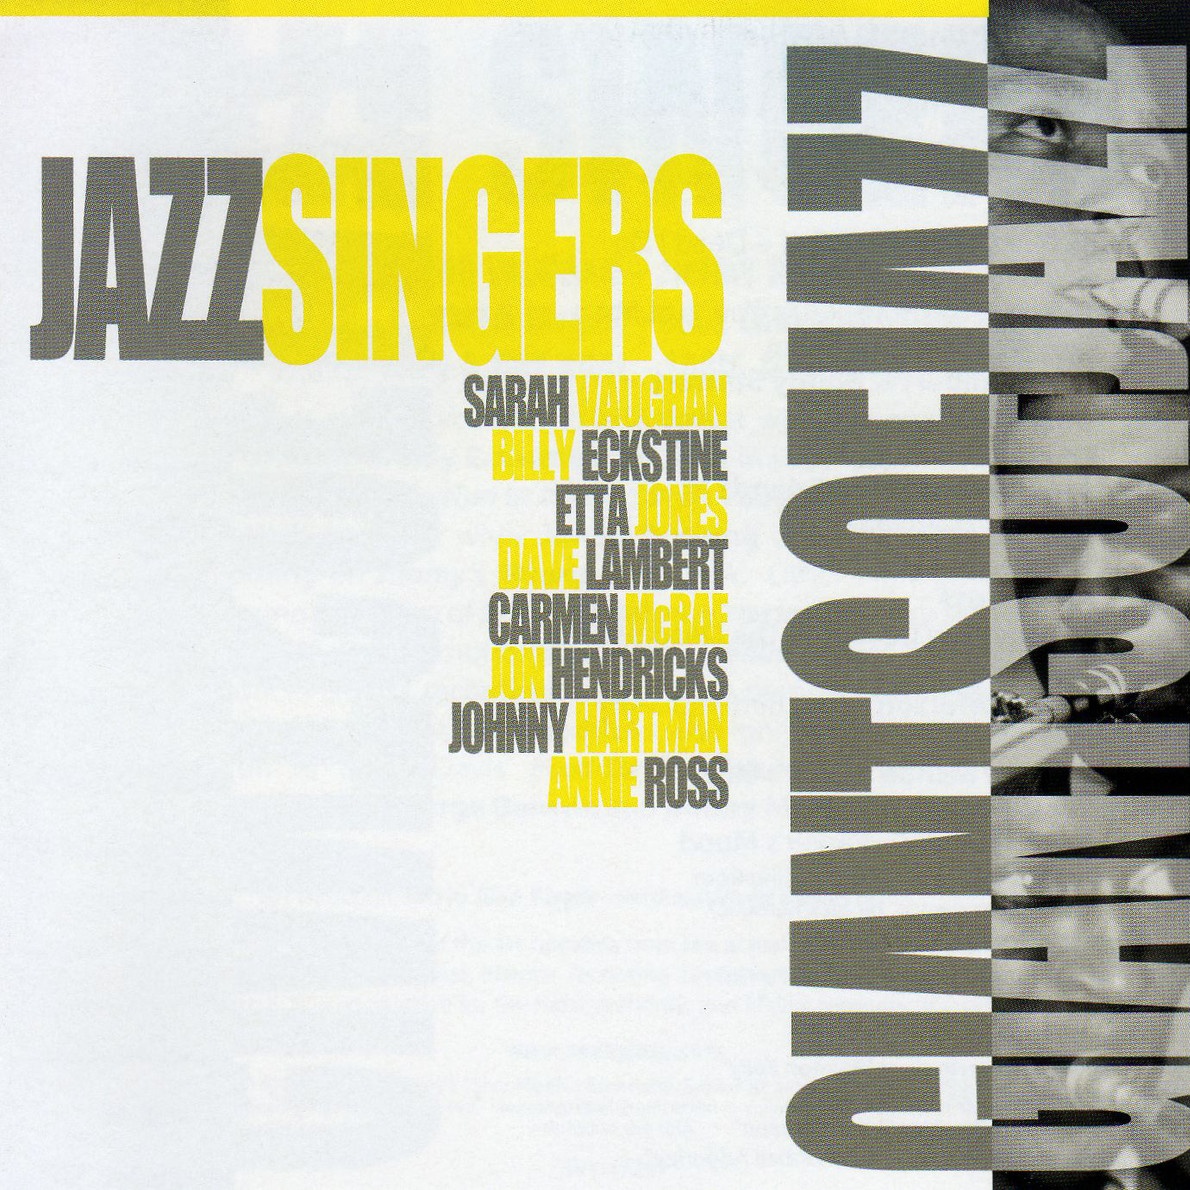 Giants of Jazz: Jazz Singers